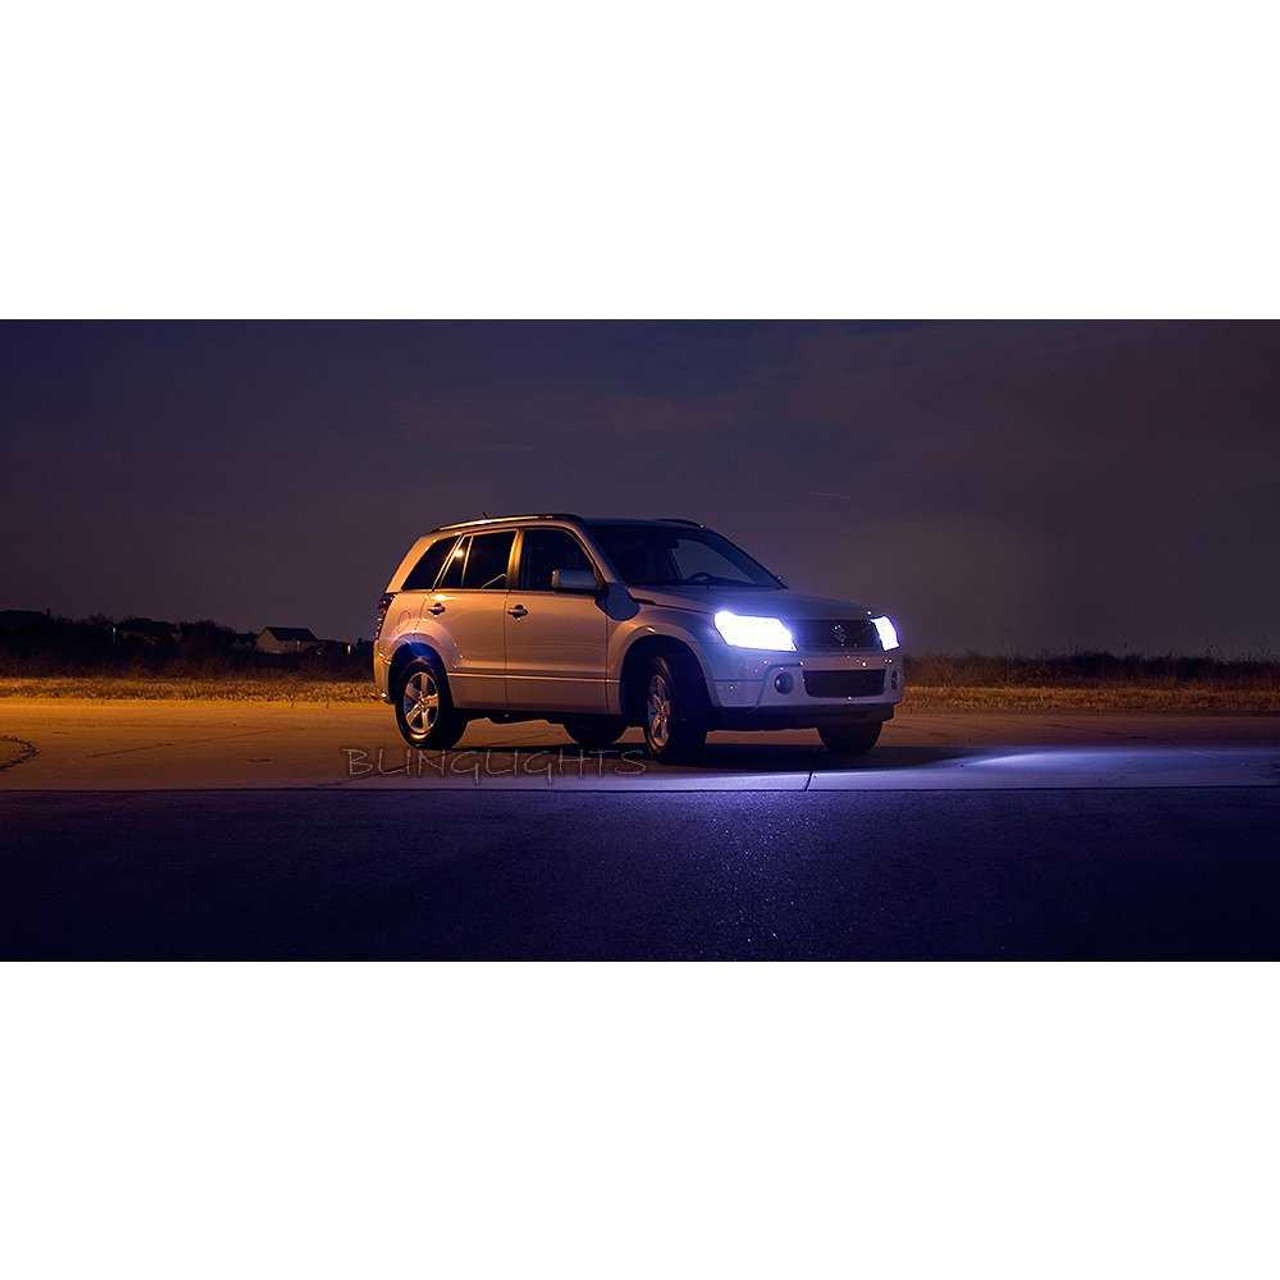 Suzuki Grand Vitara Xenon HID Conversion Kit for Headlamps Headlights Head Lamps HIDs Lights